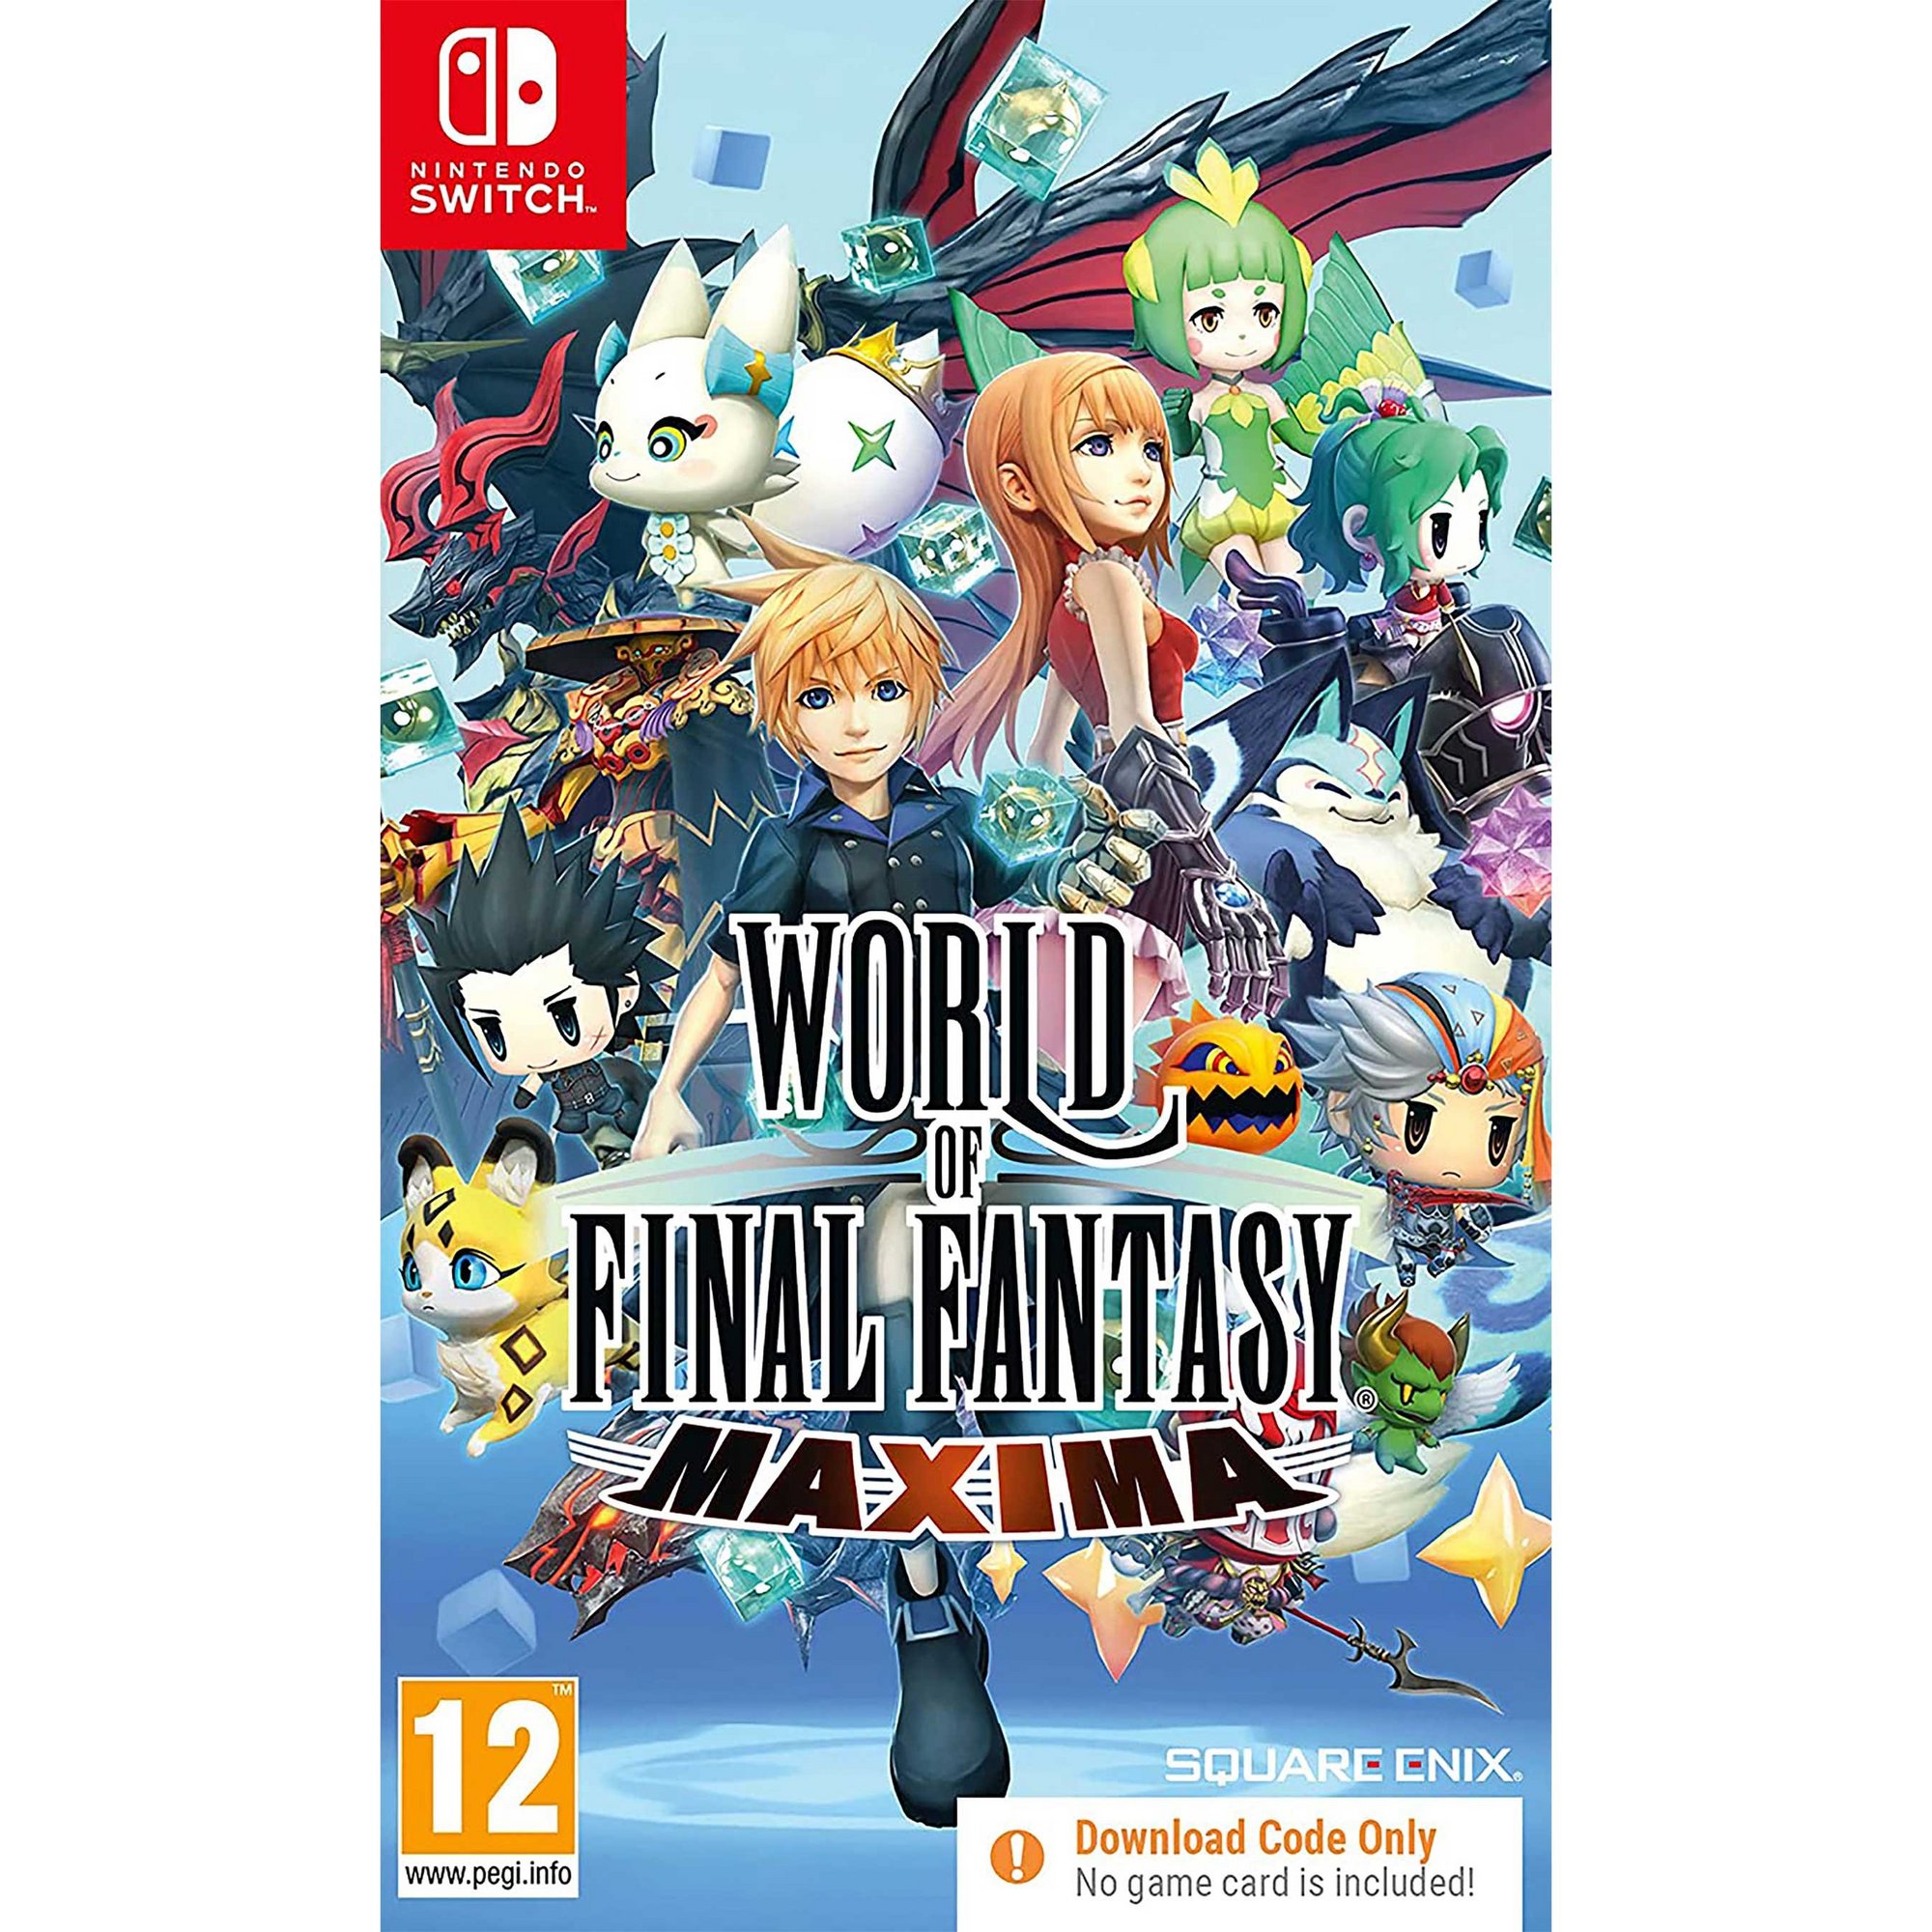 Nintendo Switch: World Of Final Fantasy Maxima